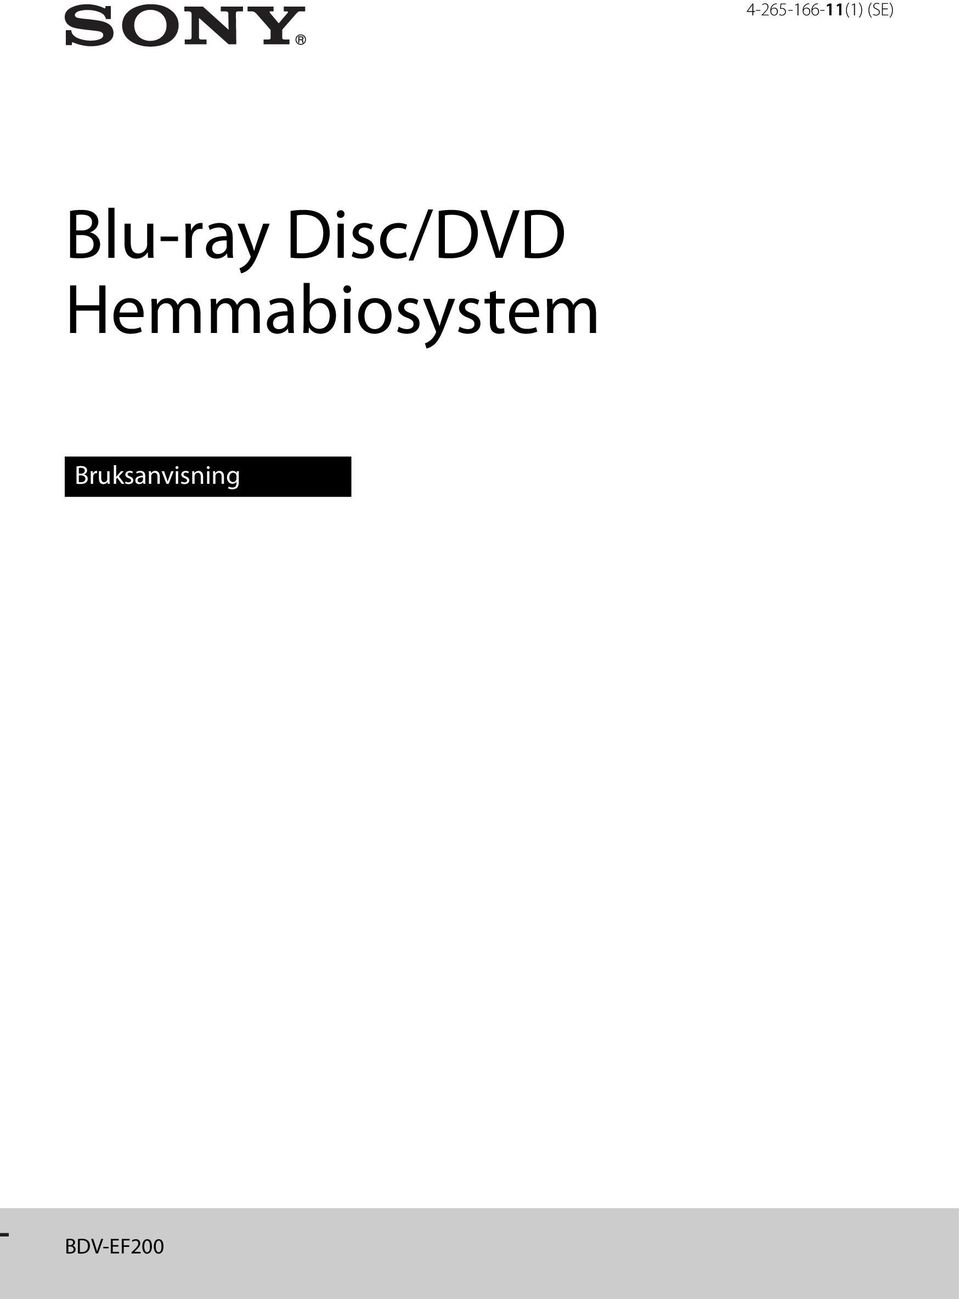 Disc/DVD